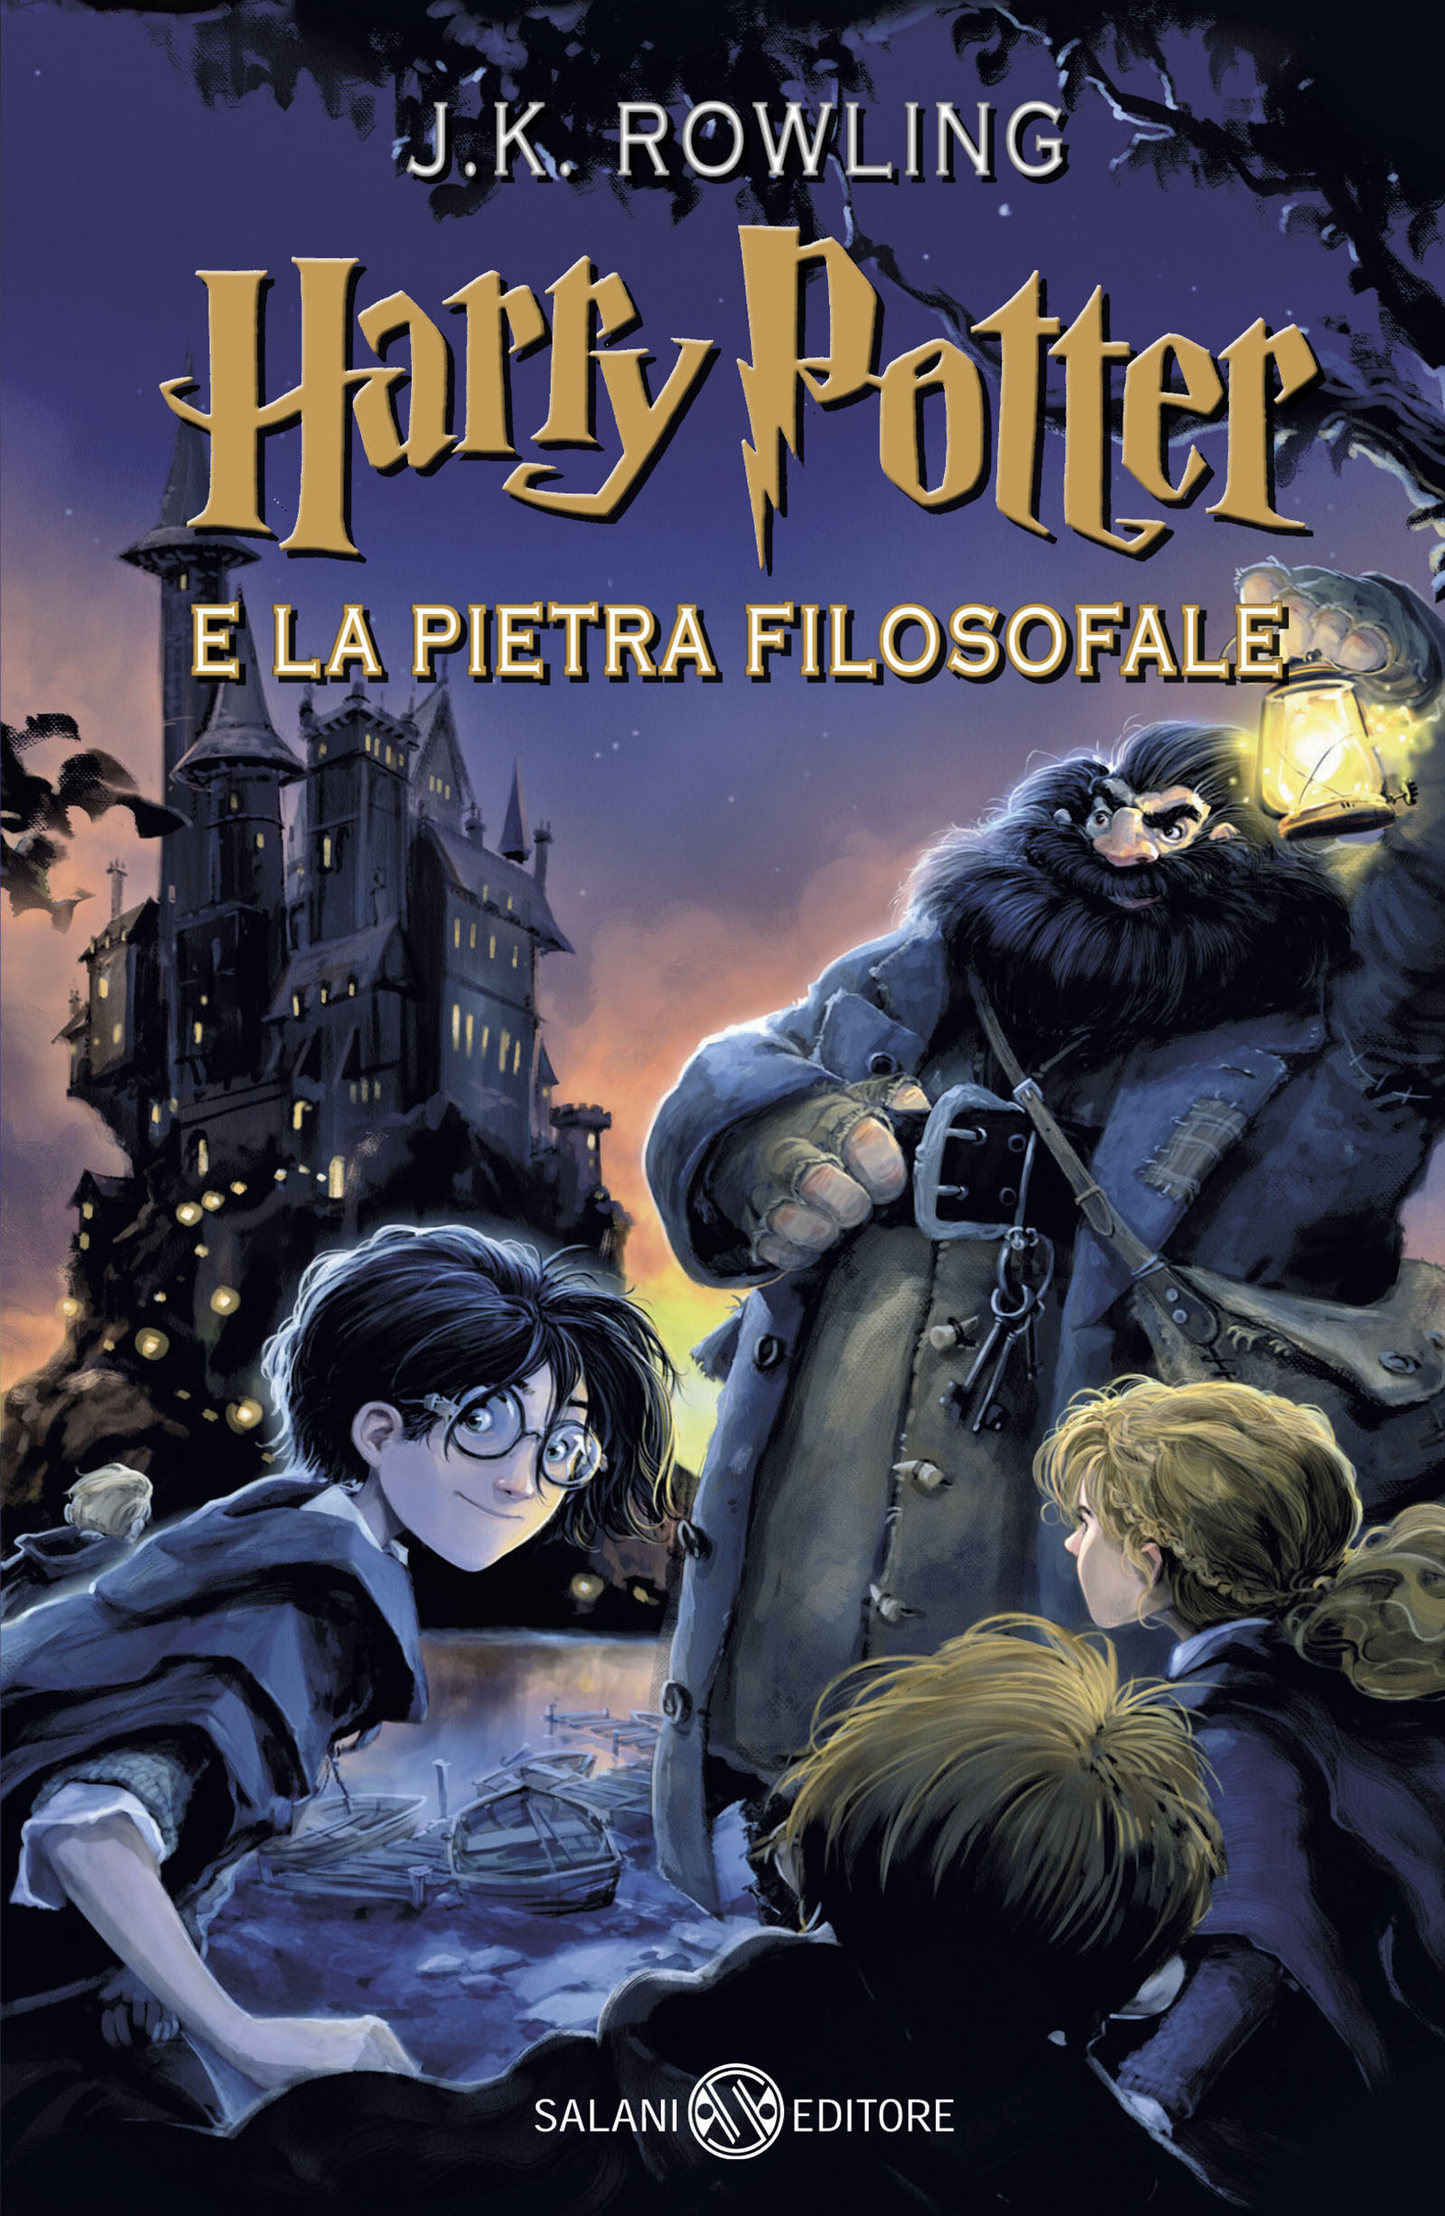 Harry Potter e la pietra filosofale Tascabile (Vol. 1) - J. K. Rowling - Salani